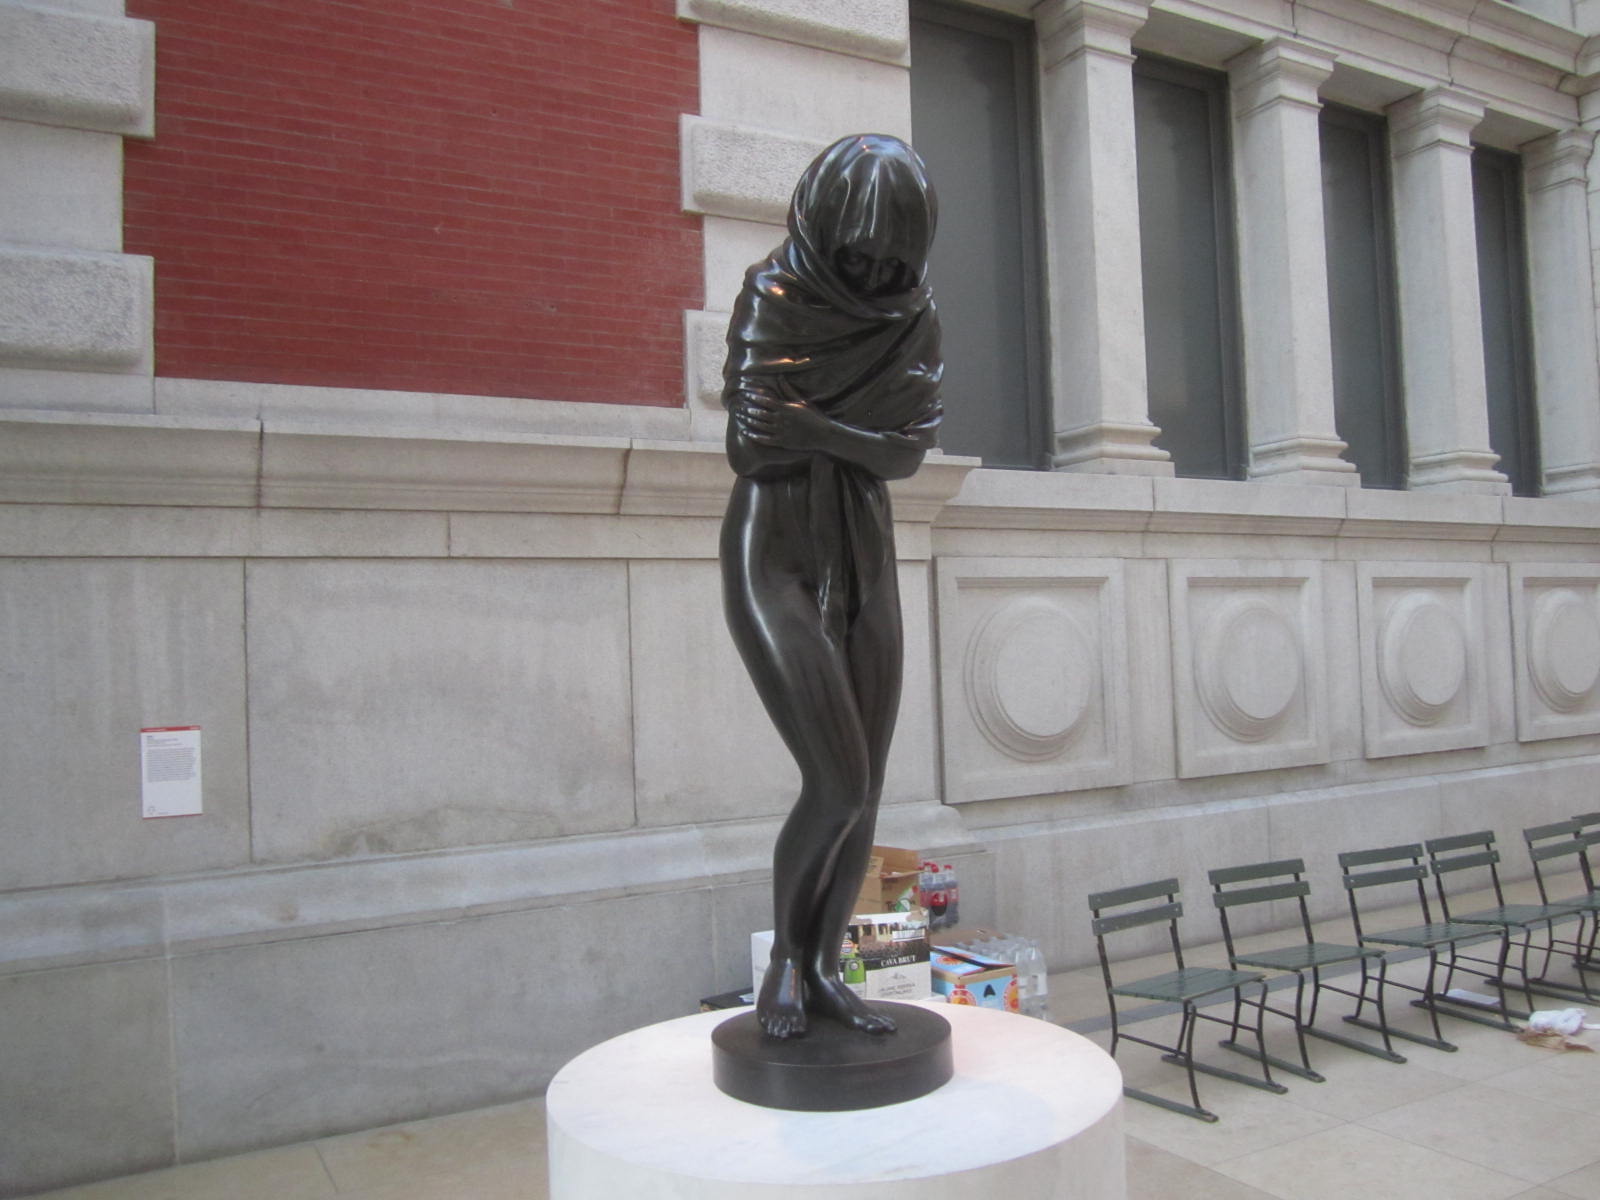 Statue at the Metropolitan Museum of Art in New York City